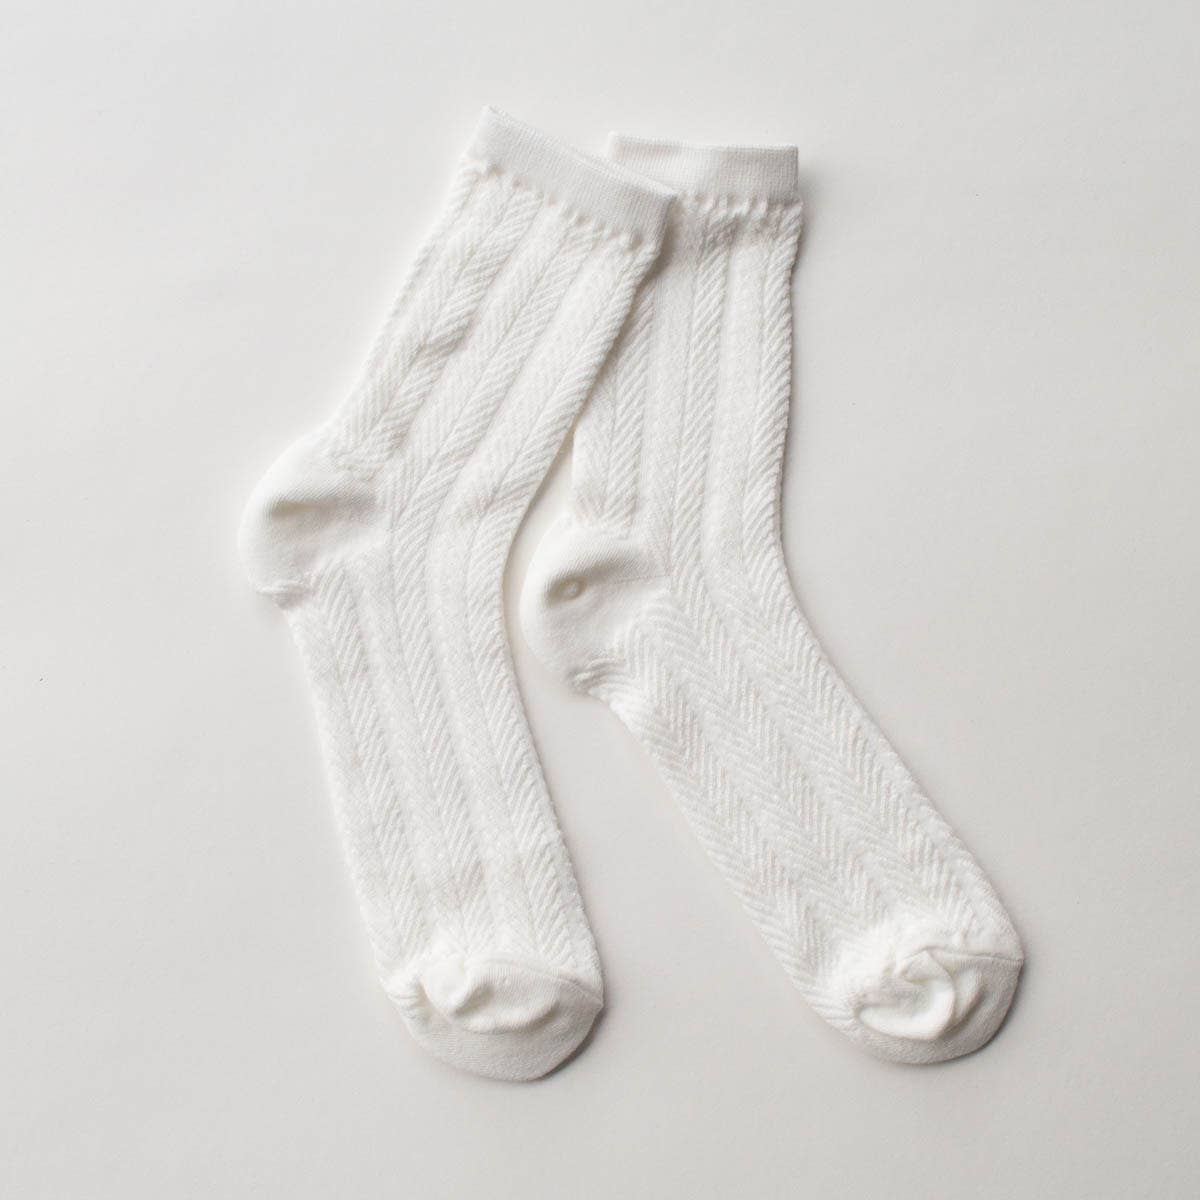 ZigZag Socks: Ivory